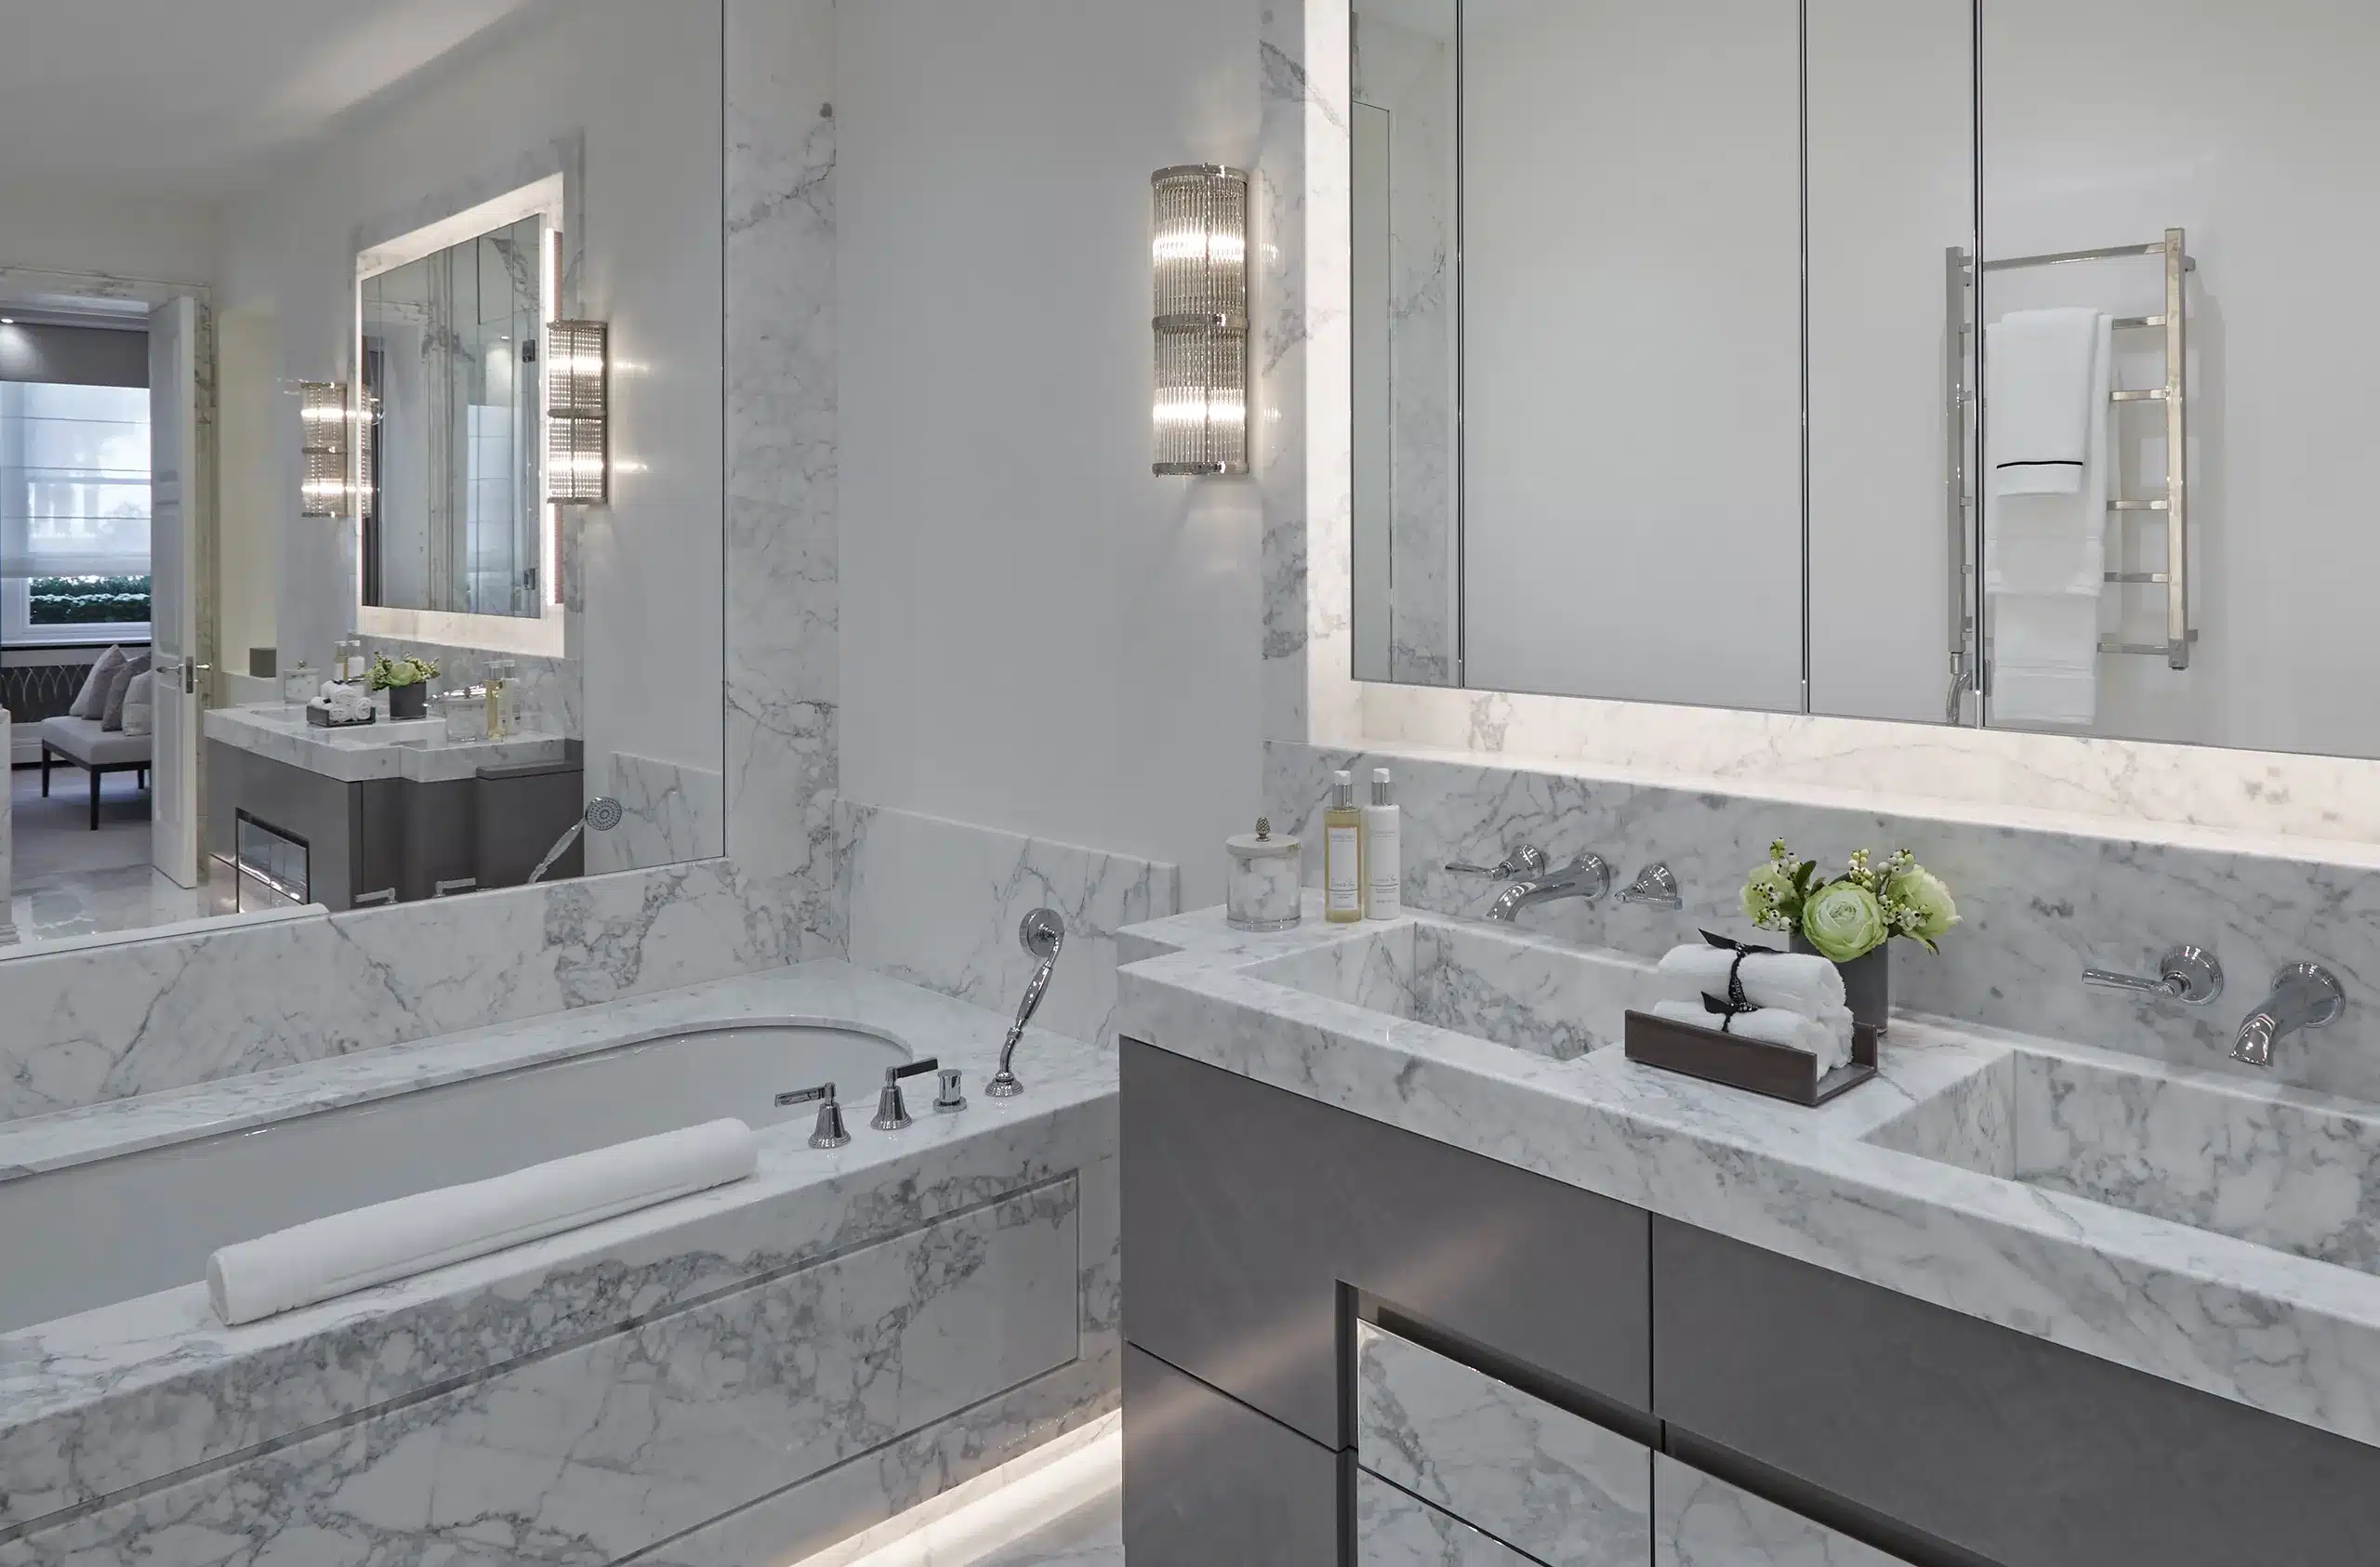 A bathroom designed by katharine pooleys london based interior design studio